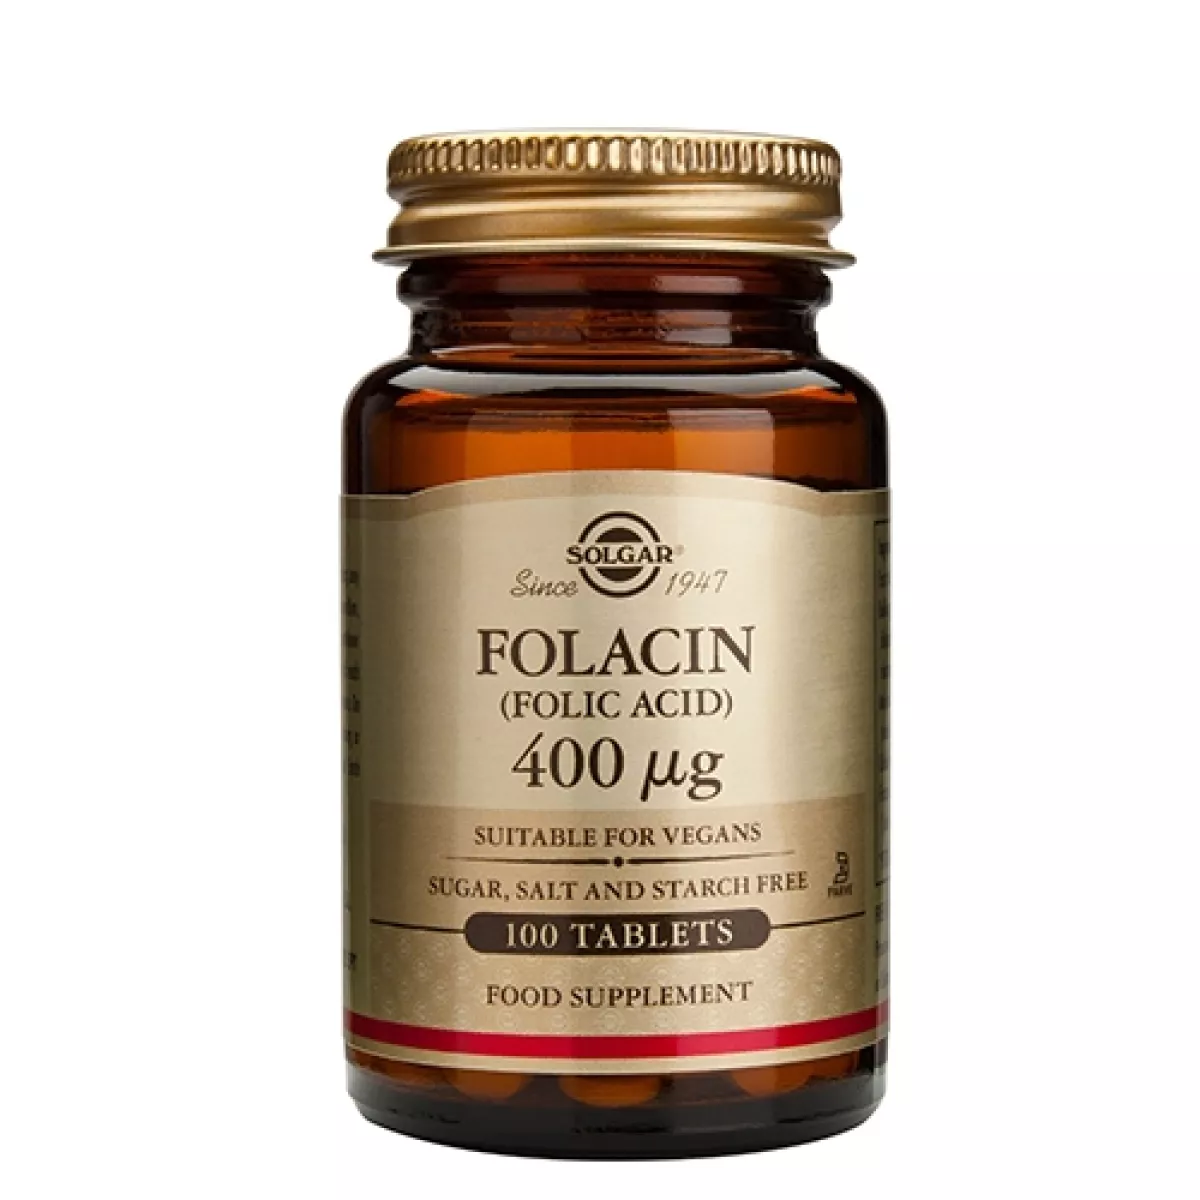 #1 - Solgar Folacin (Folinsyre) 400 Âµg - 100 tab